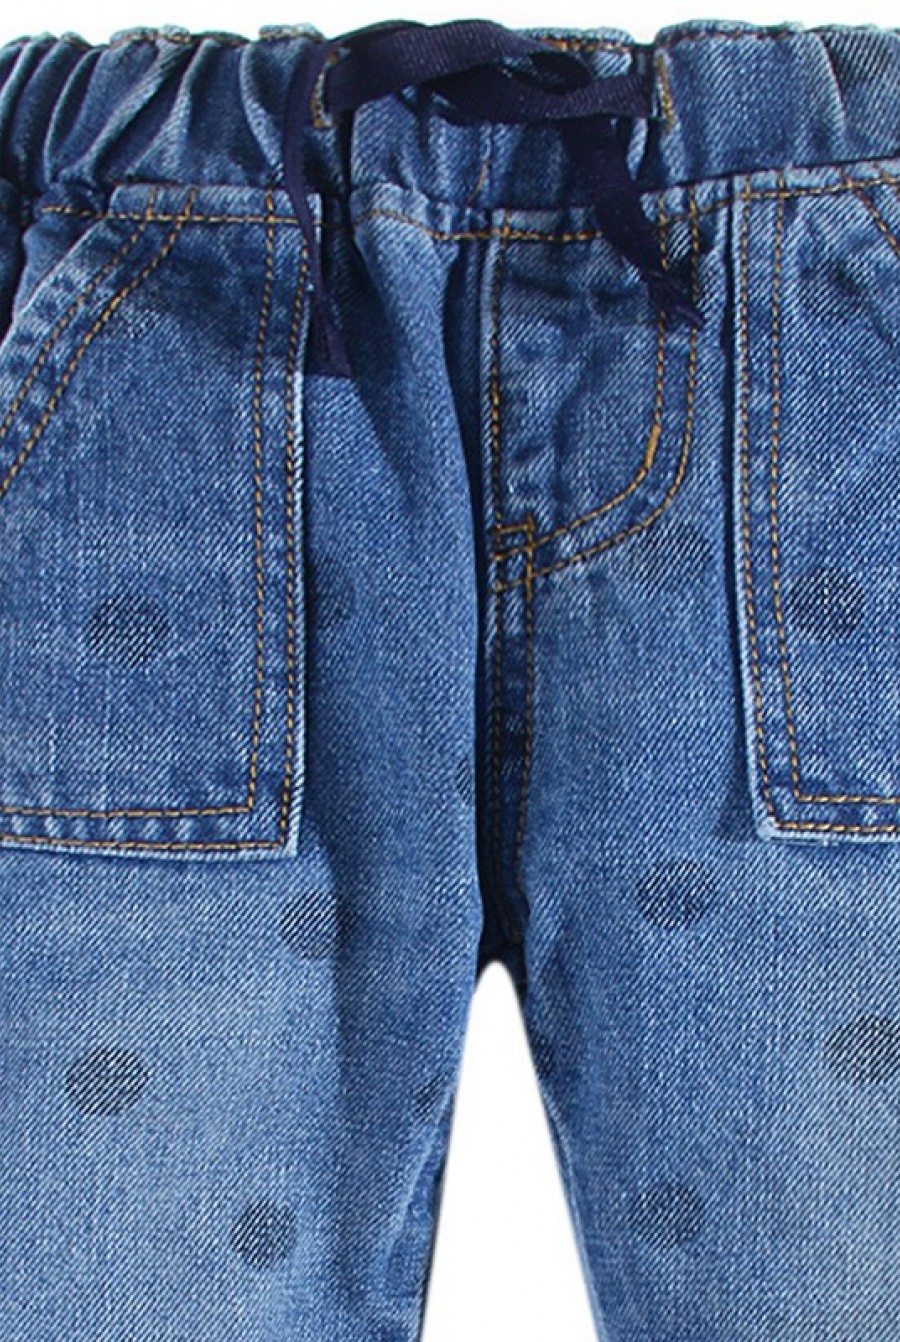 Синие джинсы-стрейч на резинке с карманами- Фото 2